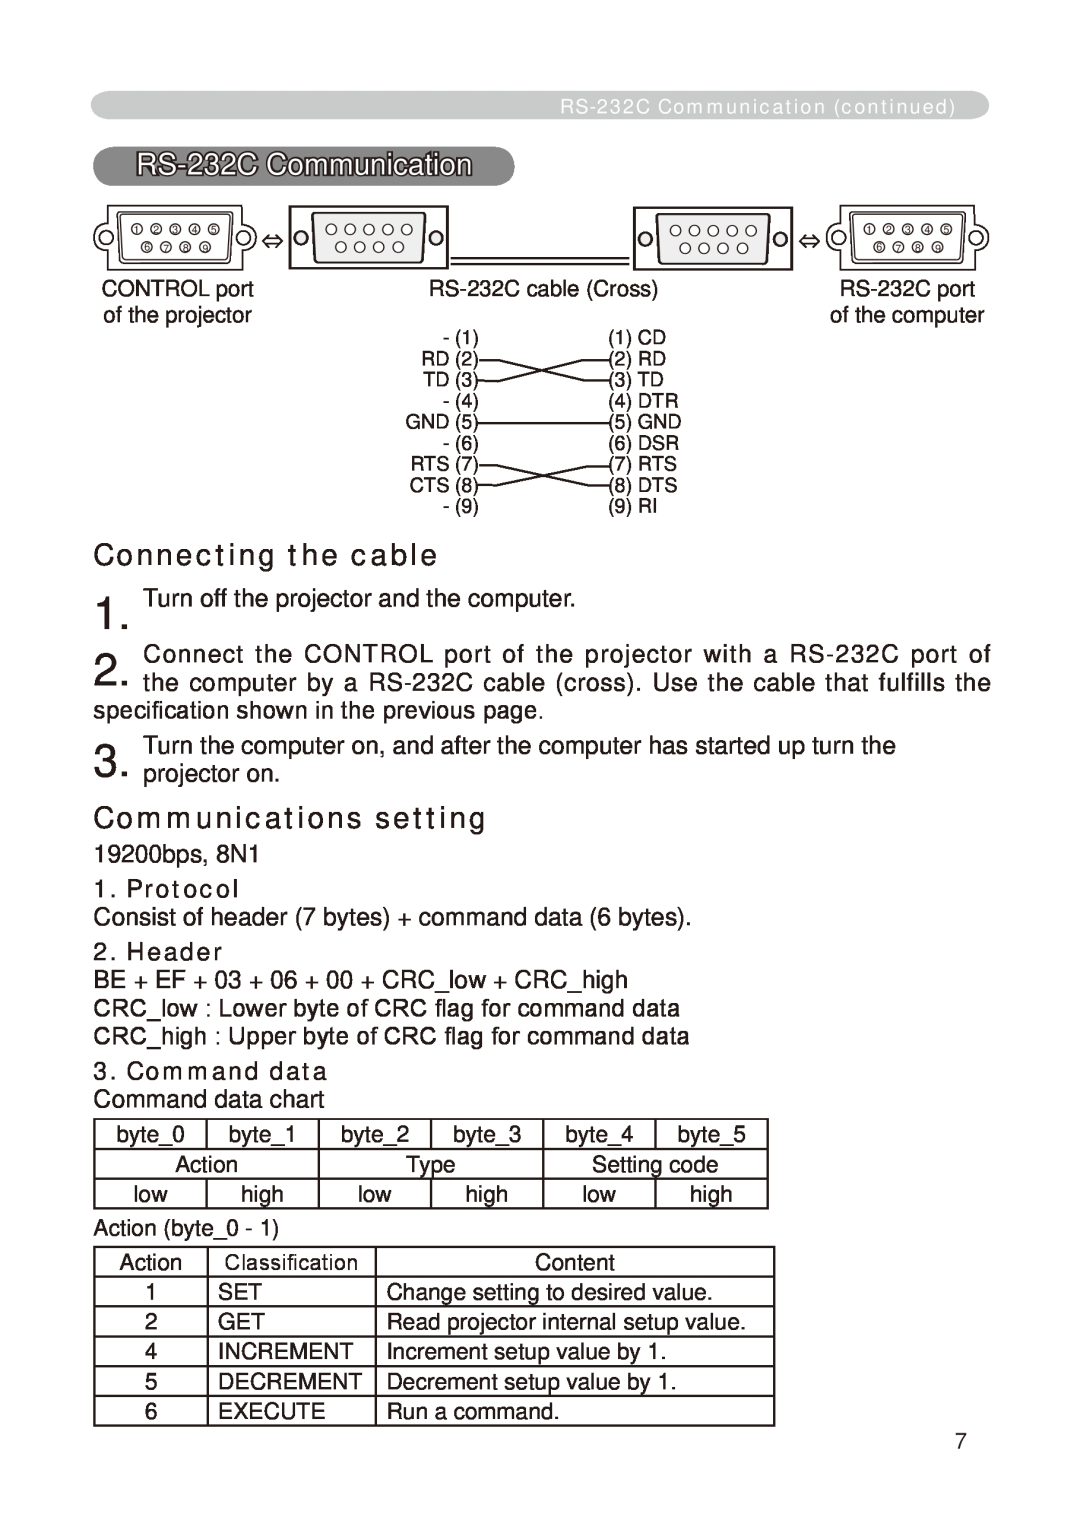 Dukane 8755E-RJ, 8776-RJ user manual RS-3C Communication, Connecting the cable, Protocol, Header 